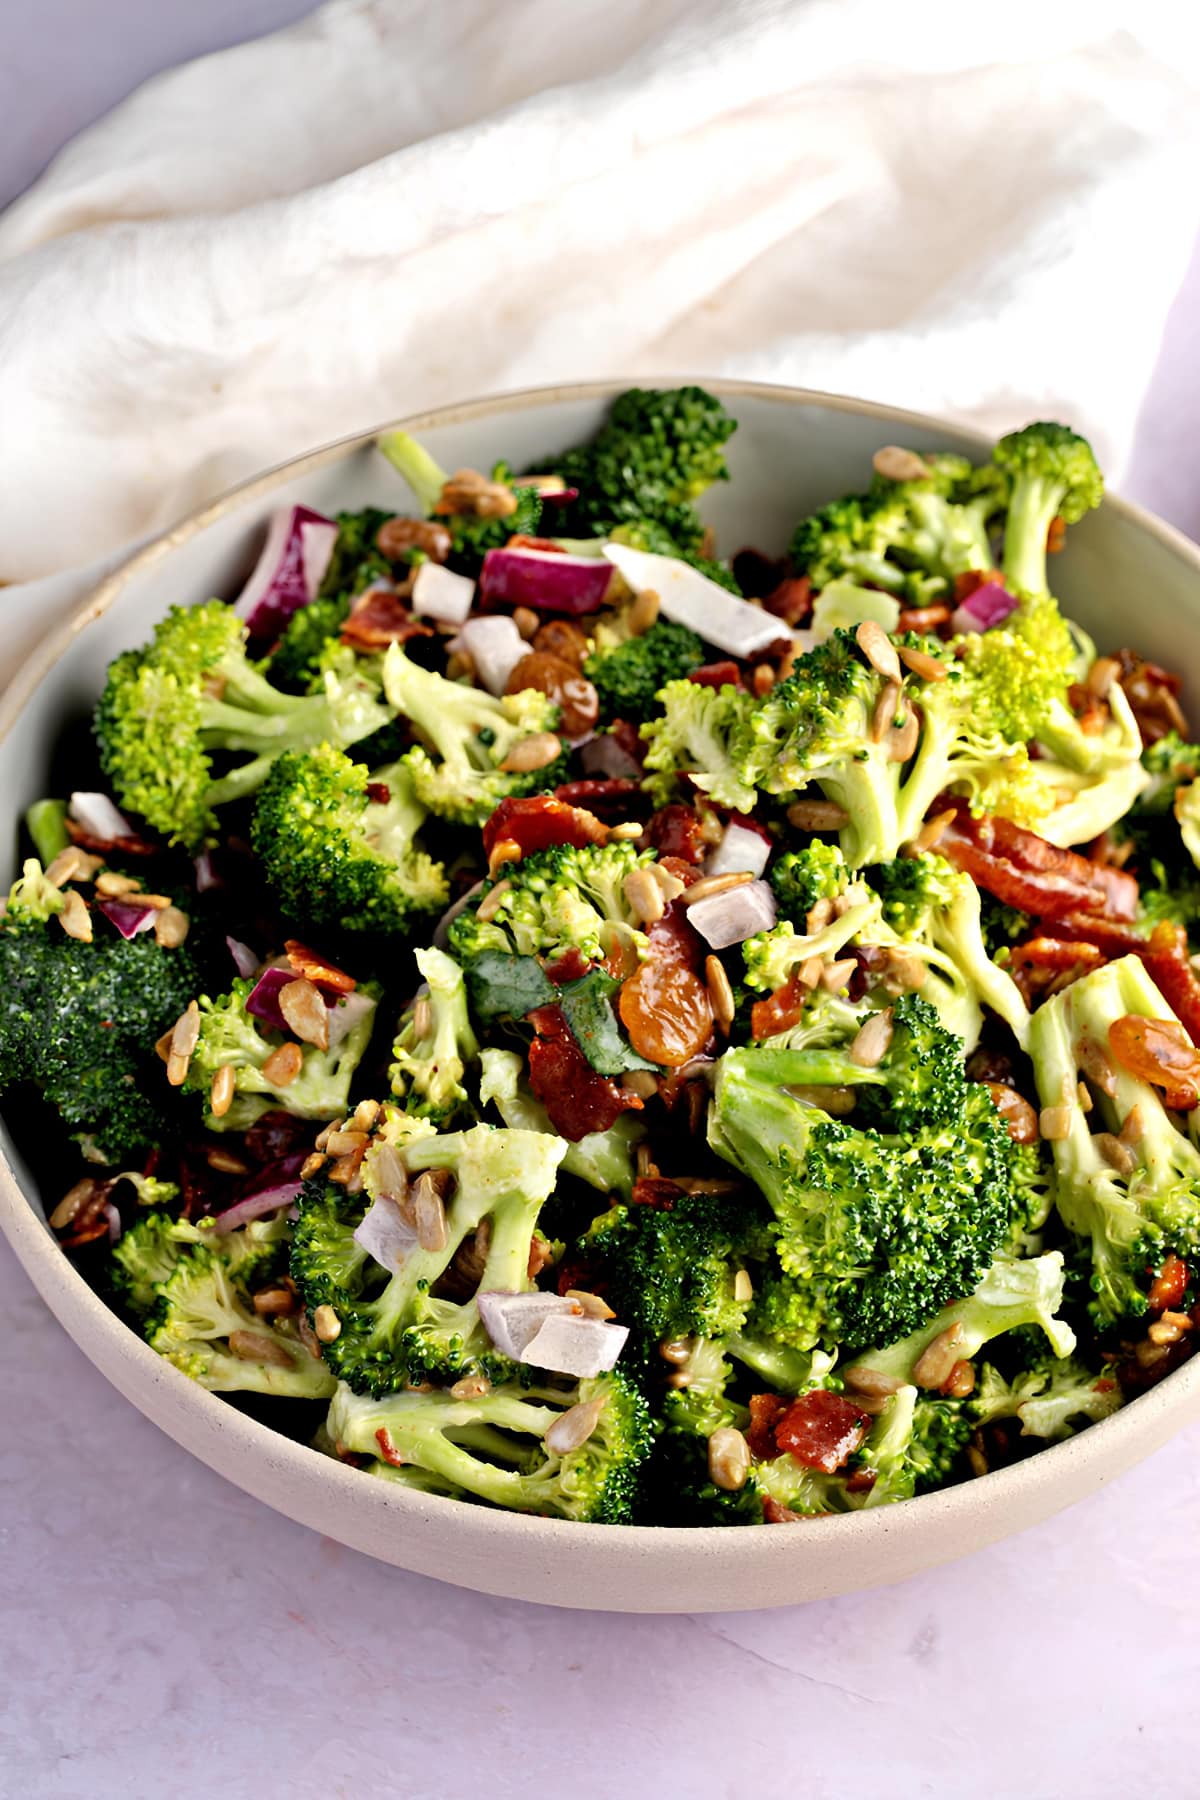 Bowl of Homemade Creamy Broccoli Salad with Bacon